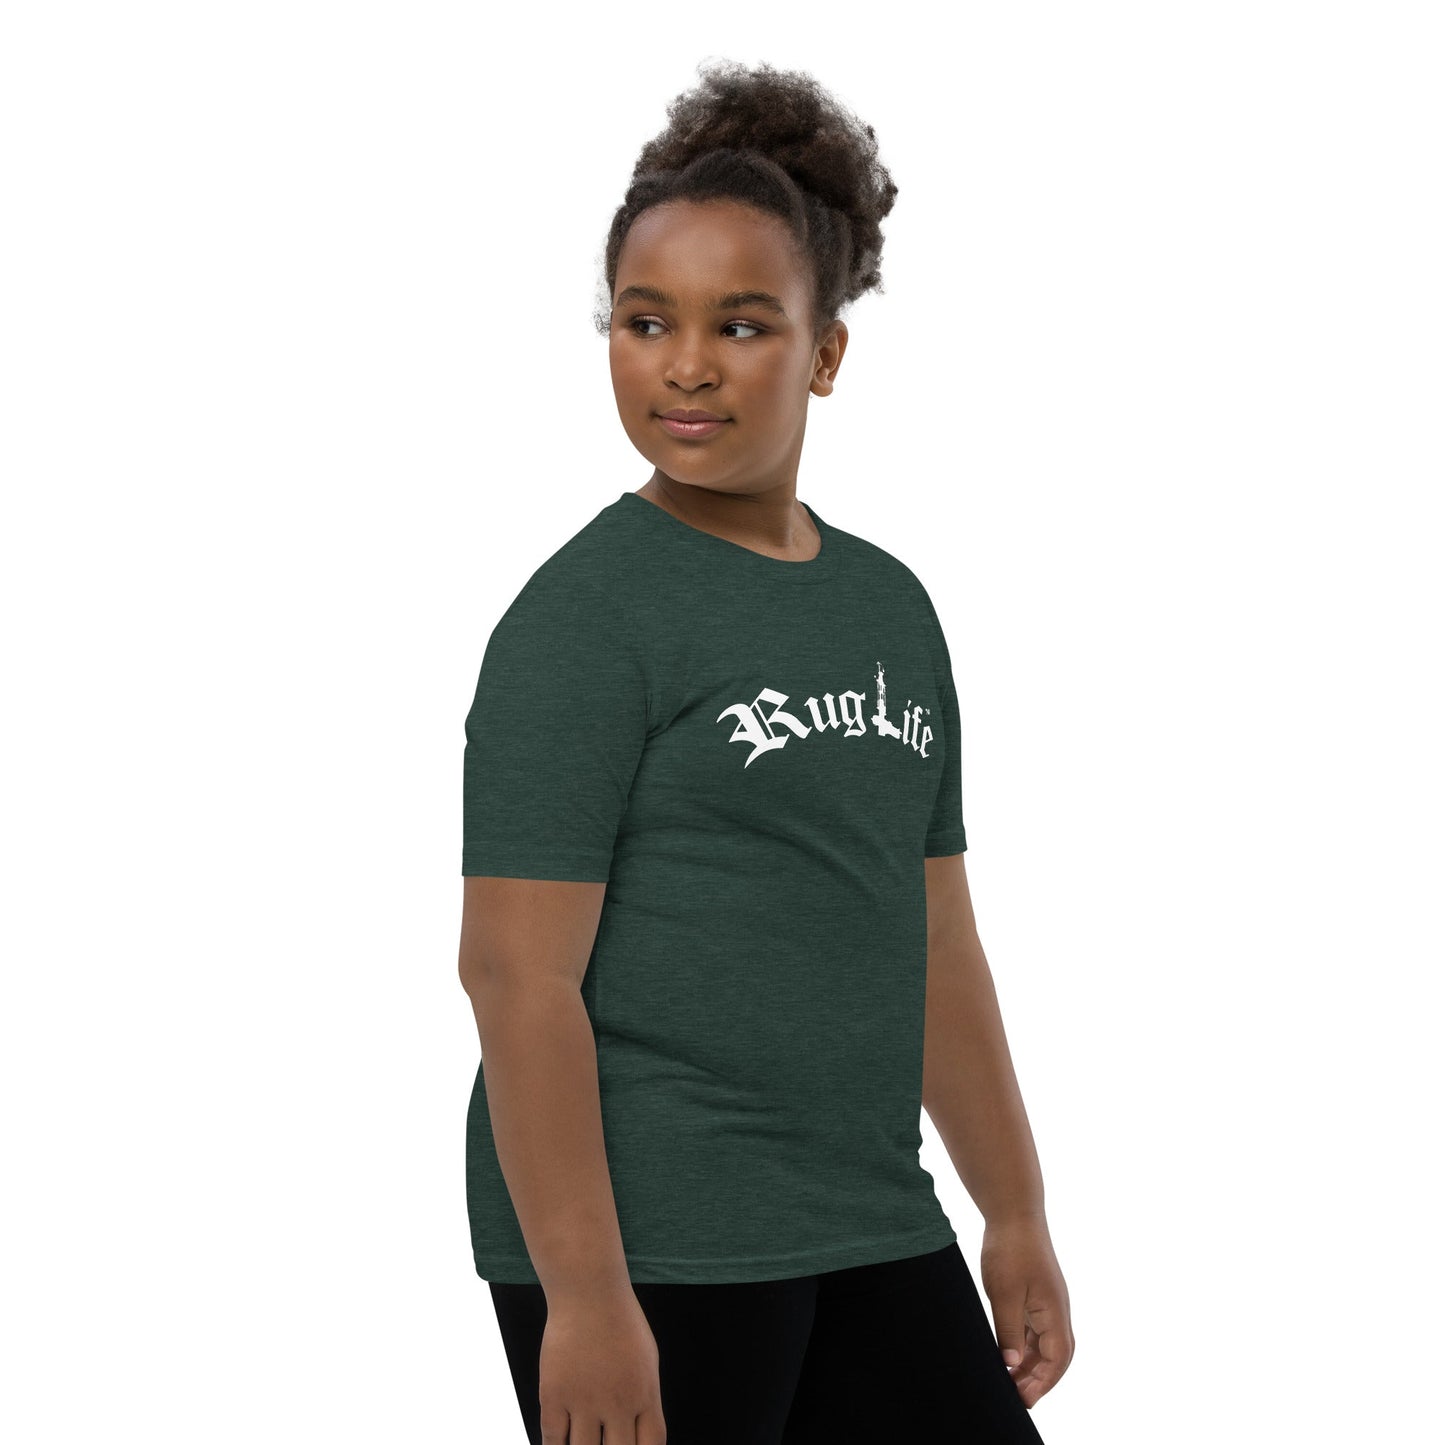 RugLife™ Youth Short Sleeve T-Shirt - MyTuftedRugs.com